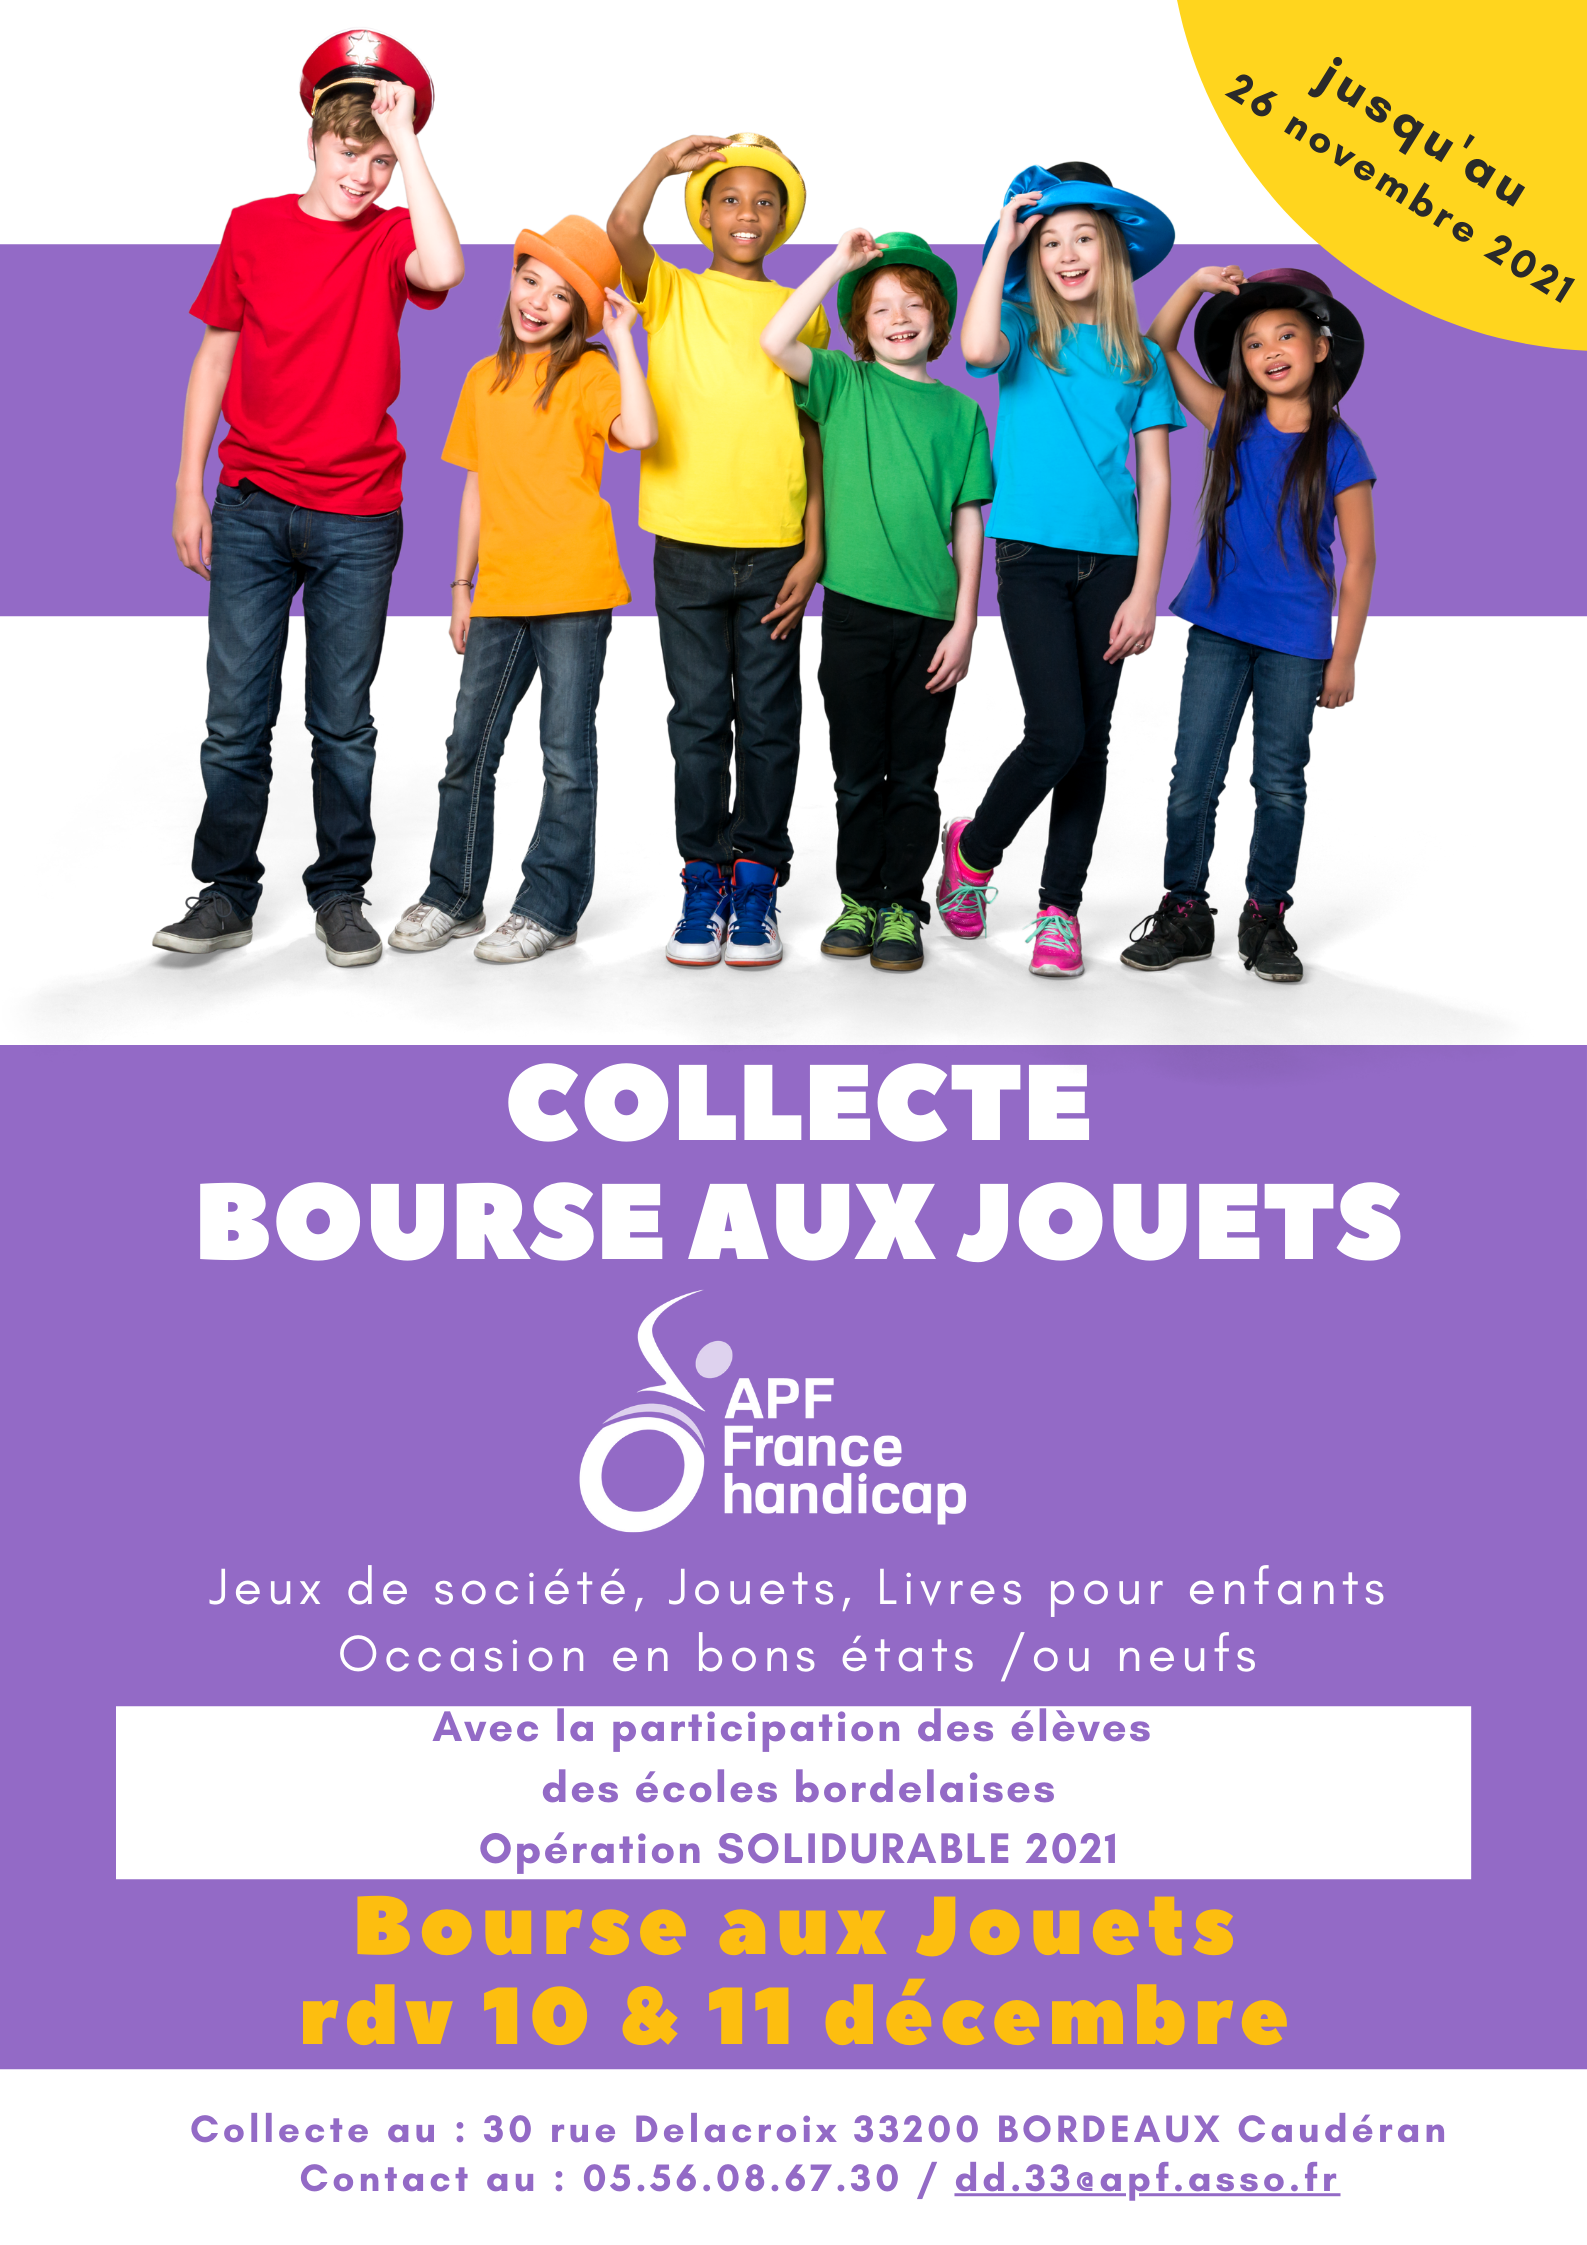 Collecte, dons, Jouets, évenements Gironde, Bordeaux, handicap, APF, Livres